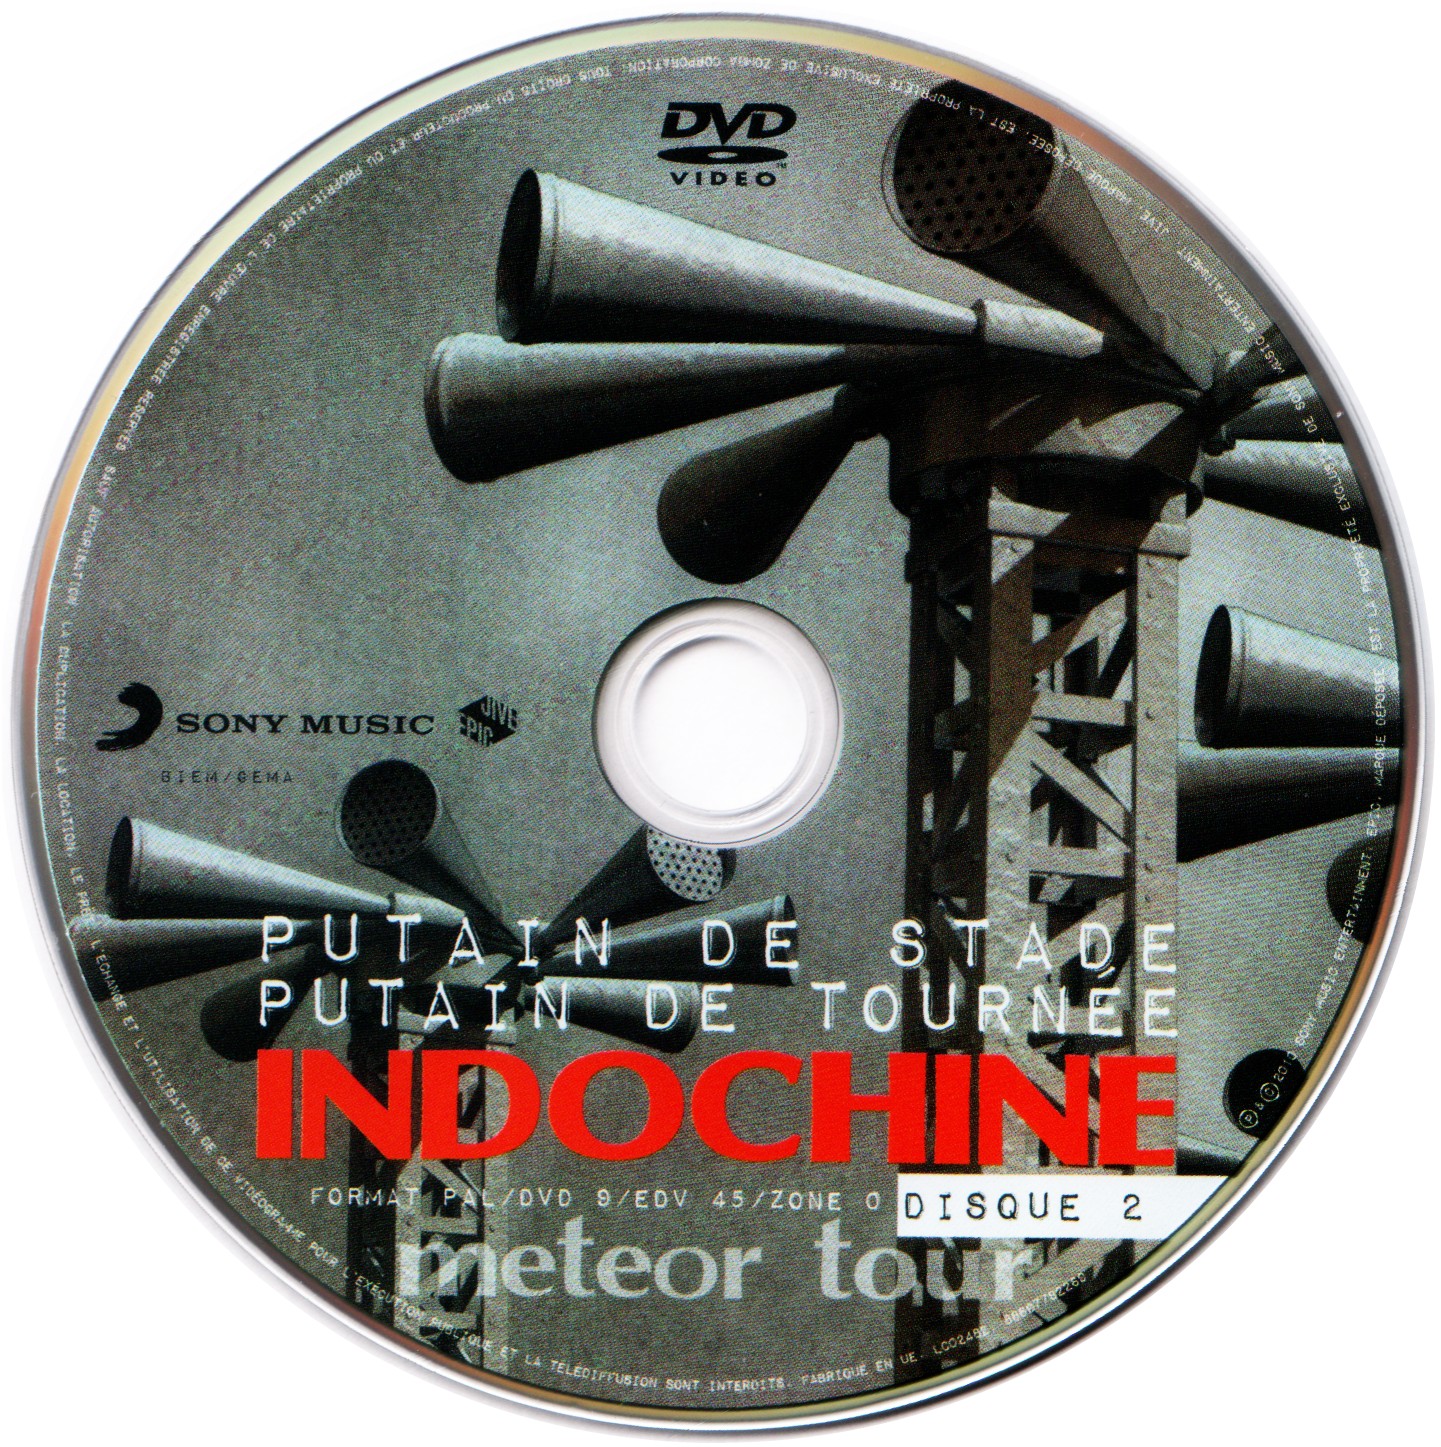 Indochine - Putain de stade DISC 2